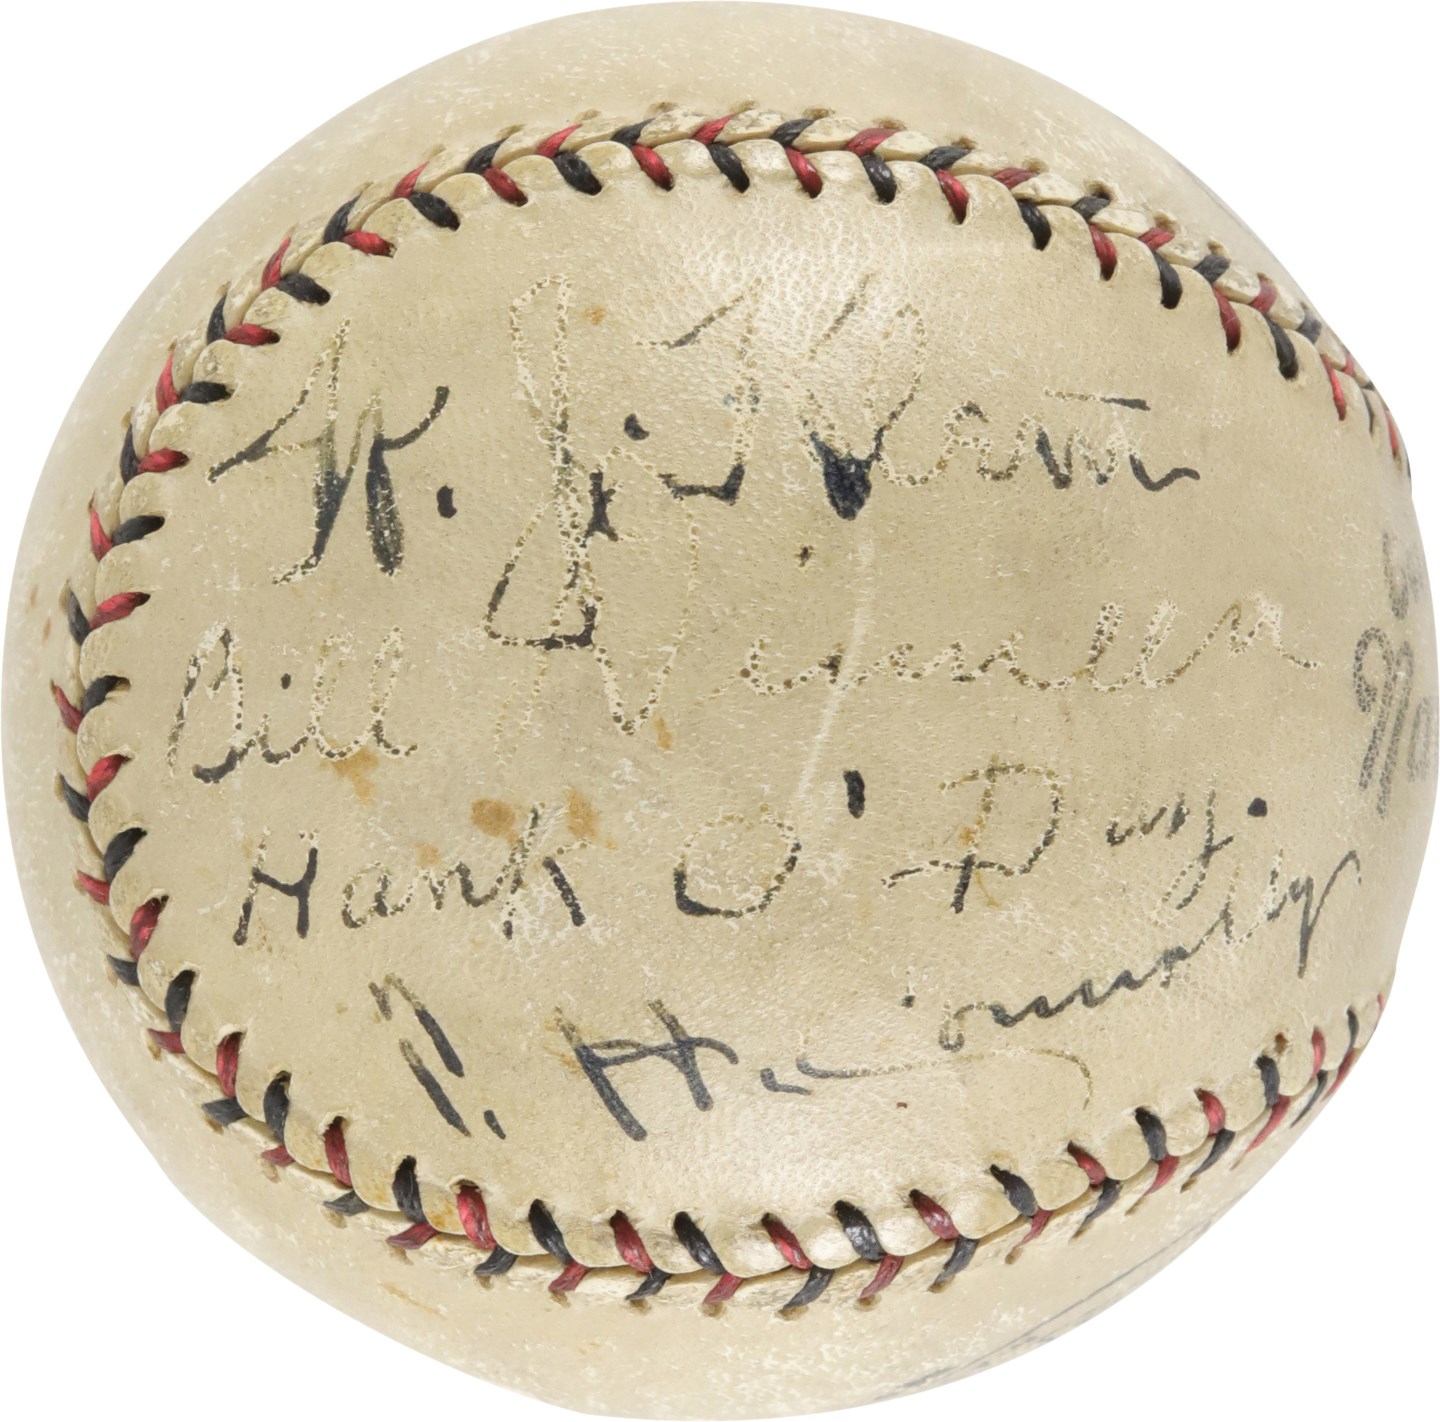 Baseball Autographs - 1920 World Series Umpire Crew Signed Baseball with Hank O'Day & Tom Connolly (PSA)